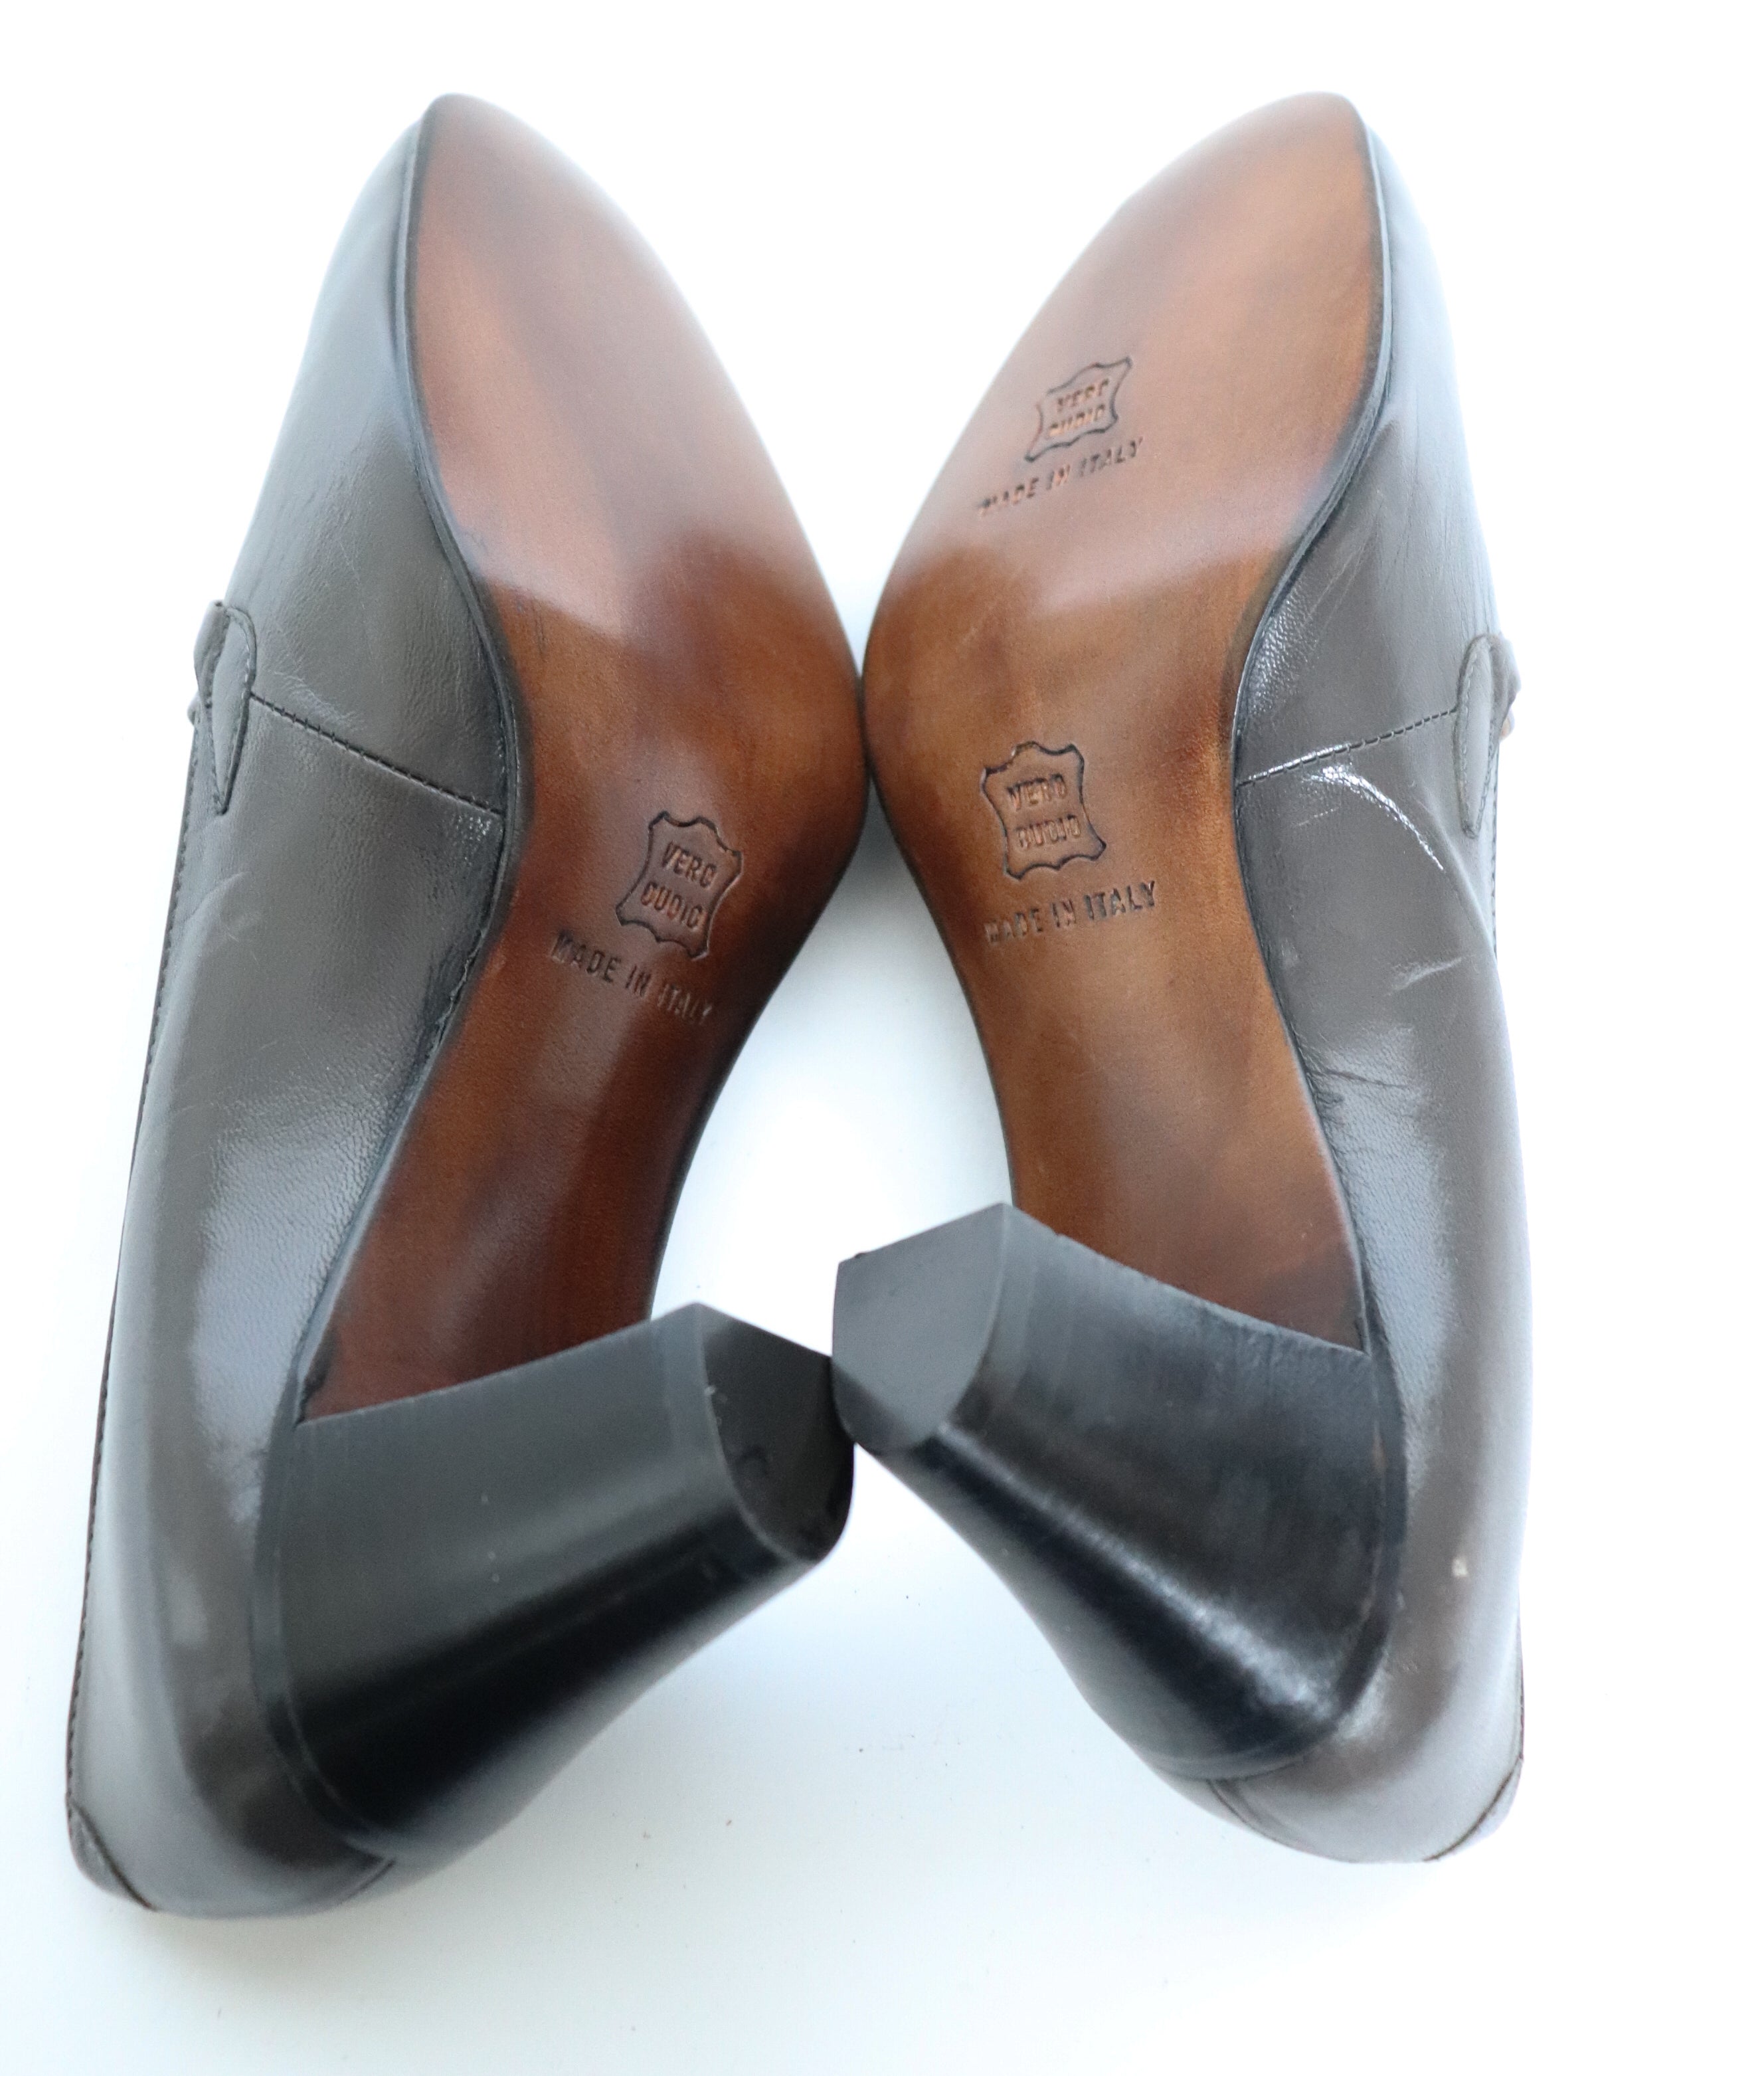 Vintage Heel Loafers - 1980s Grey Leather - Mimosa - UK 3.5 / 36.5 - UNWORN